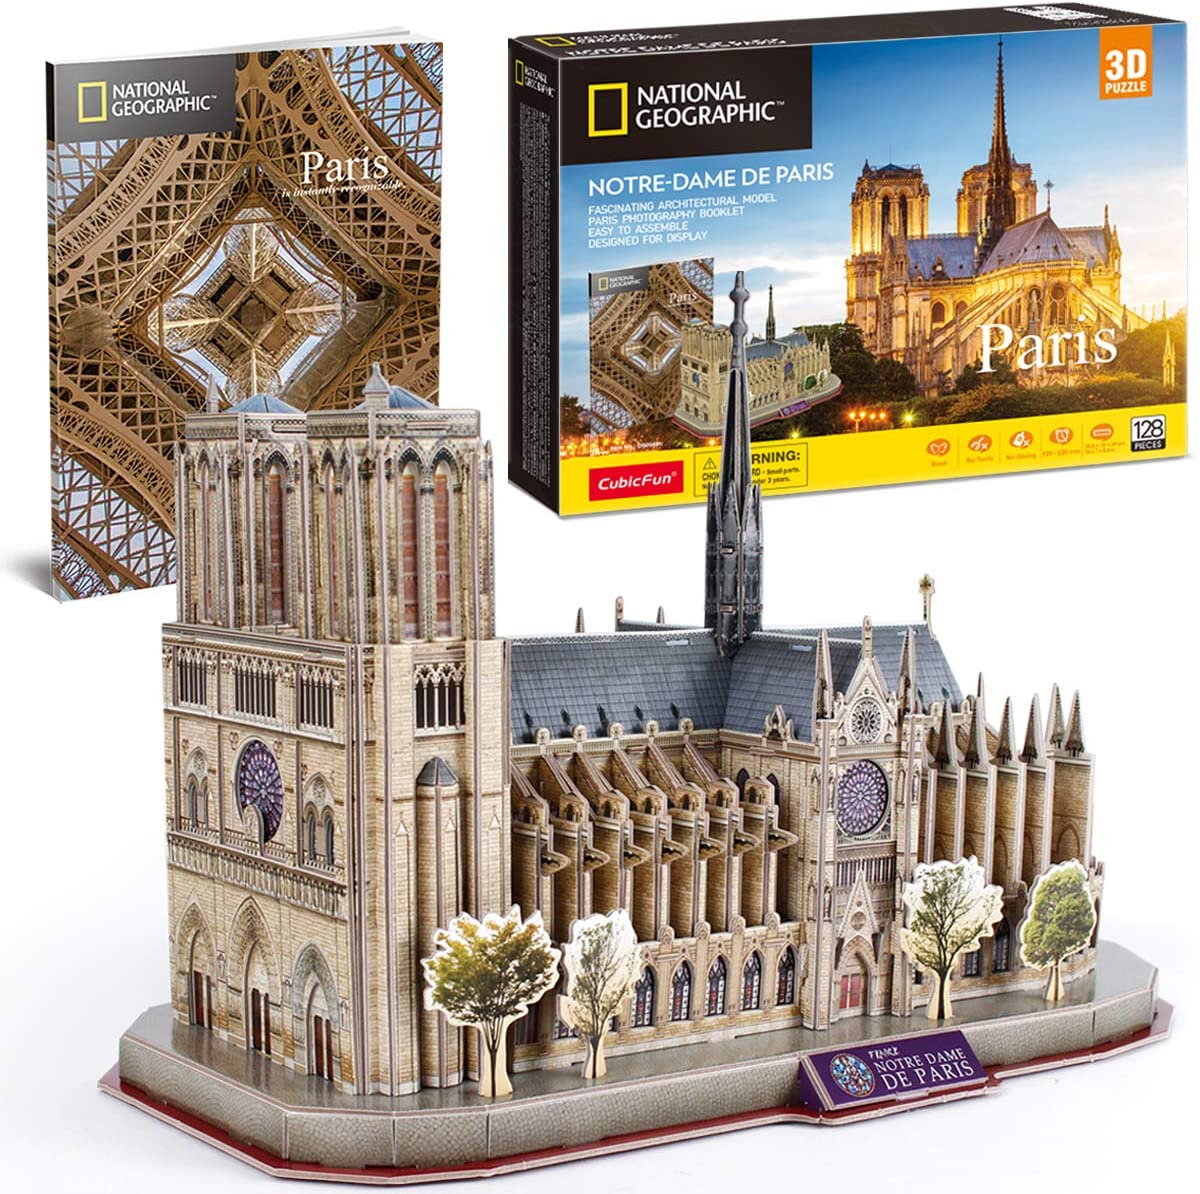 3D Puzzles for sale in Paris, France, Facebook Marketplace